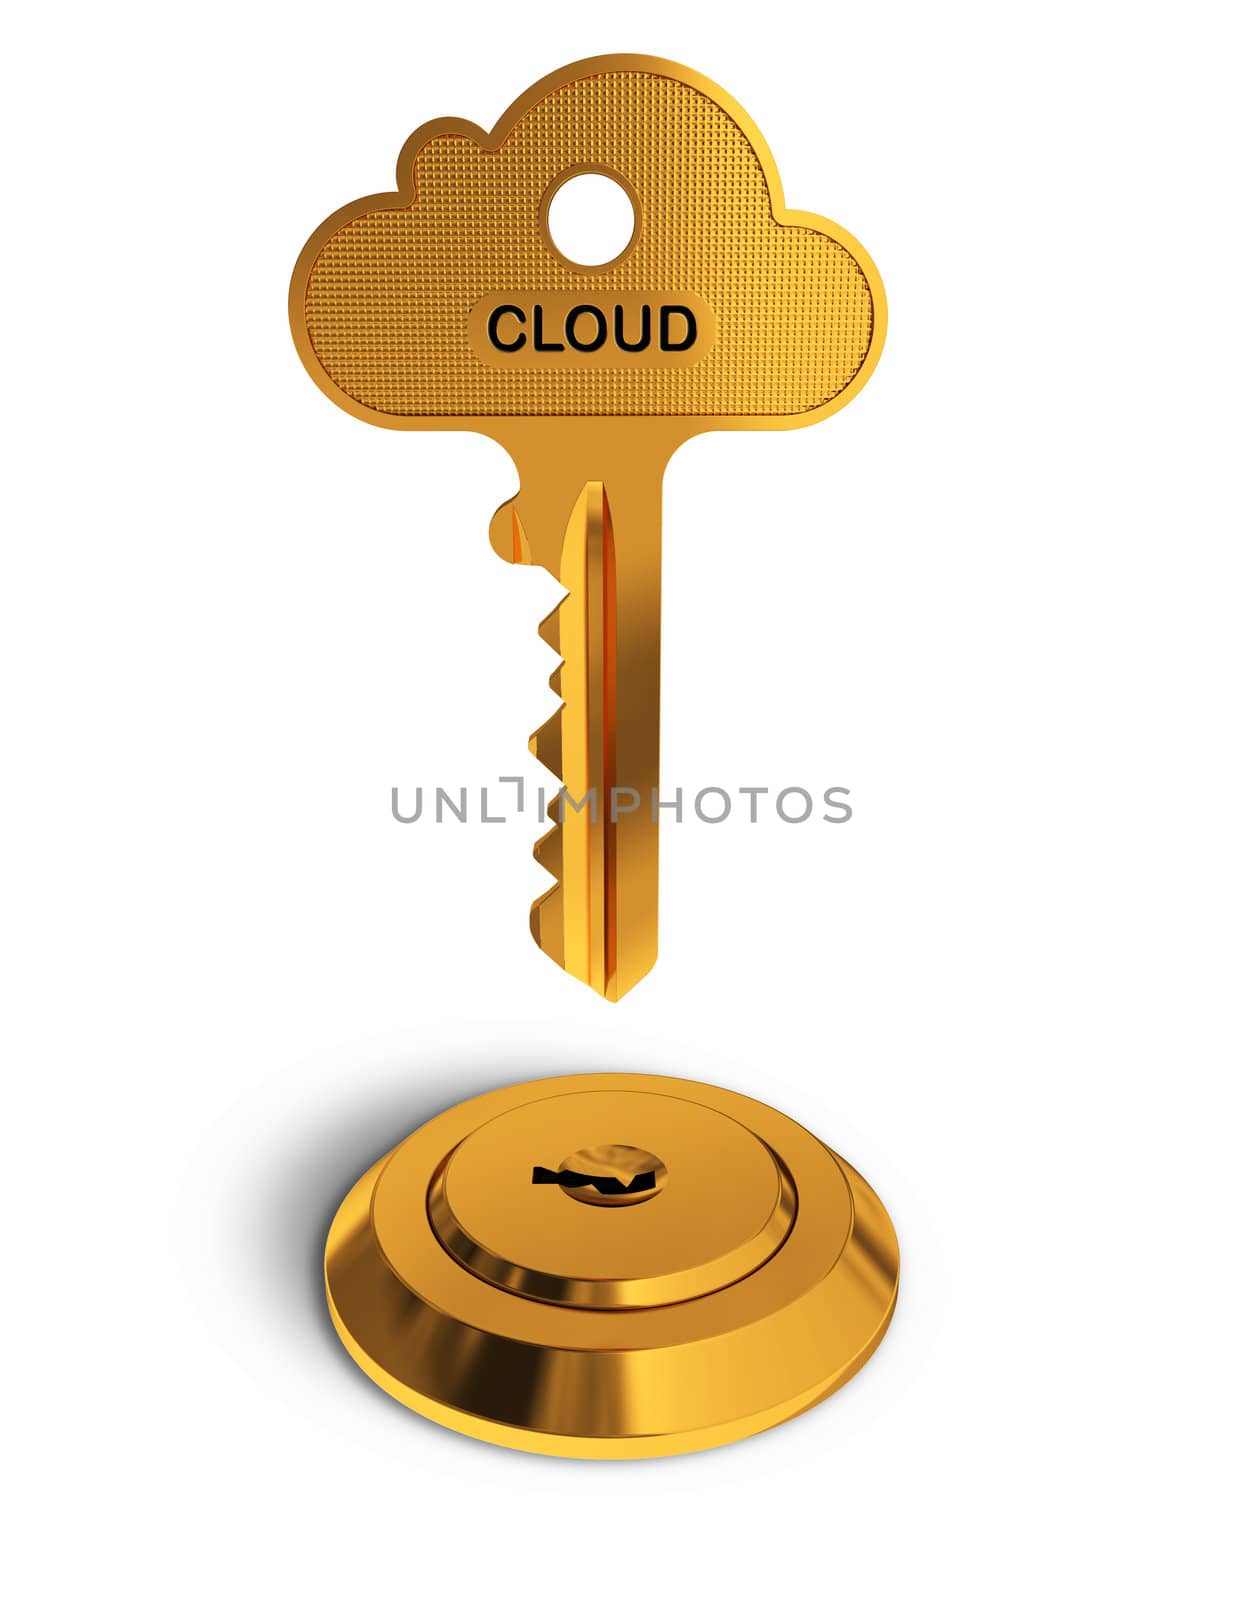 Cloud gold key by faberfoto